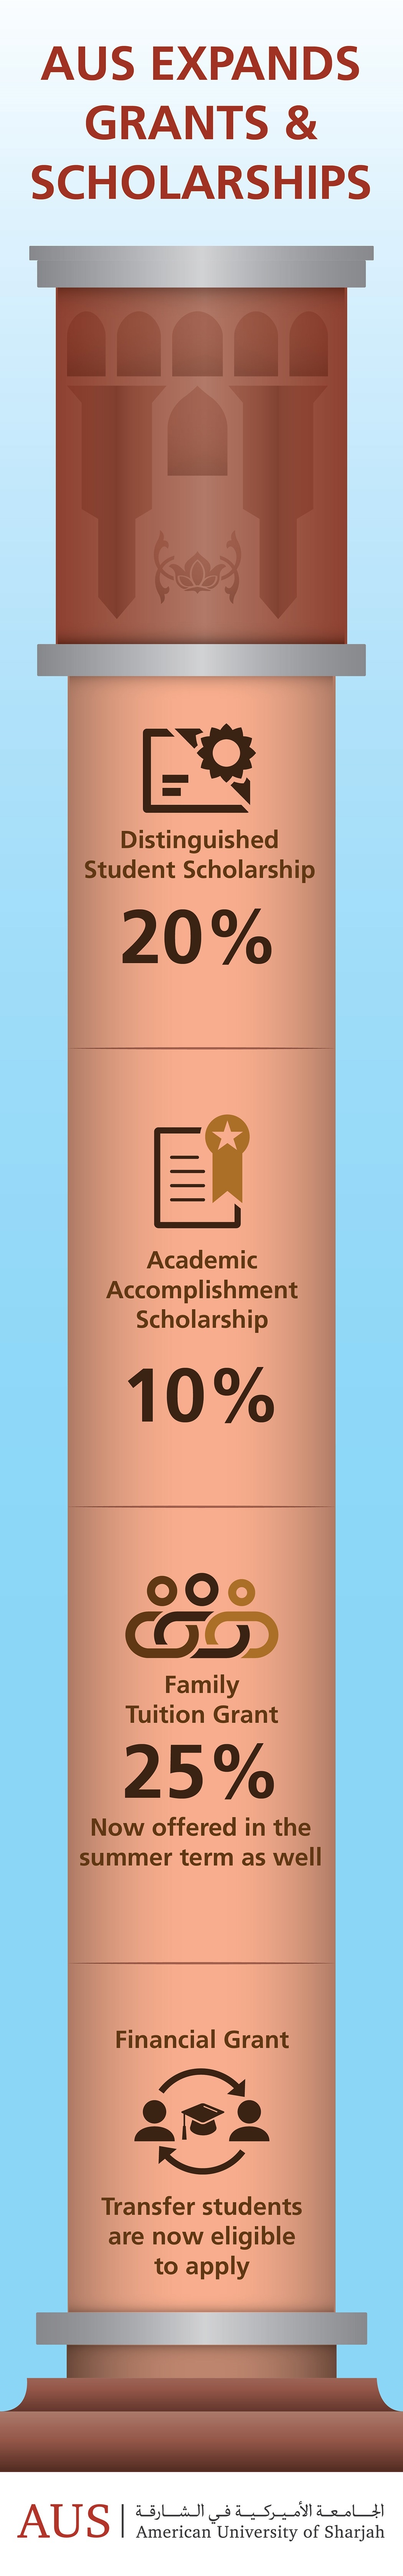 American University of Sharjah Grants and Scholarship.jpg